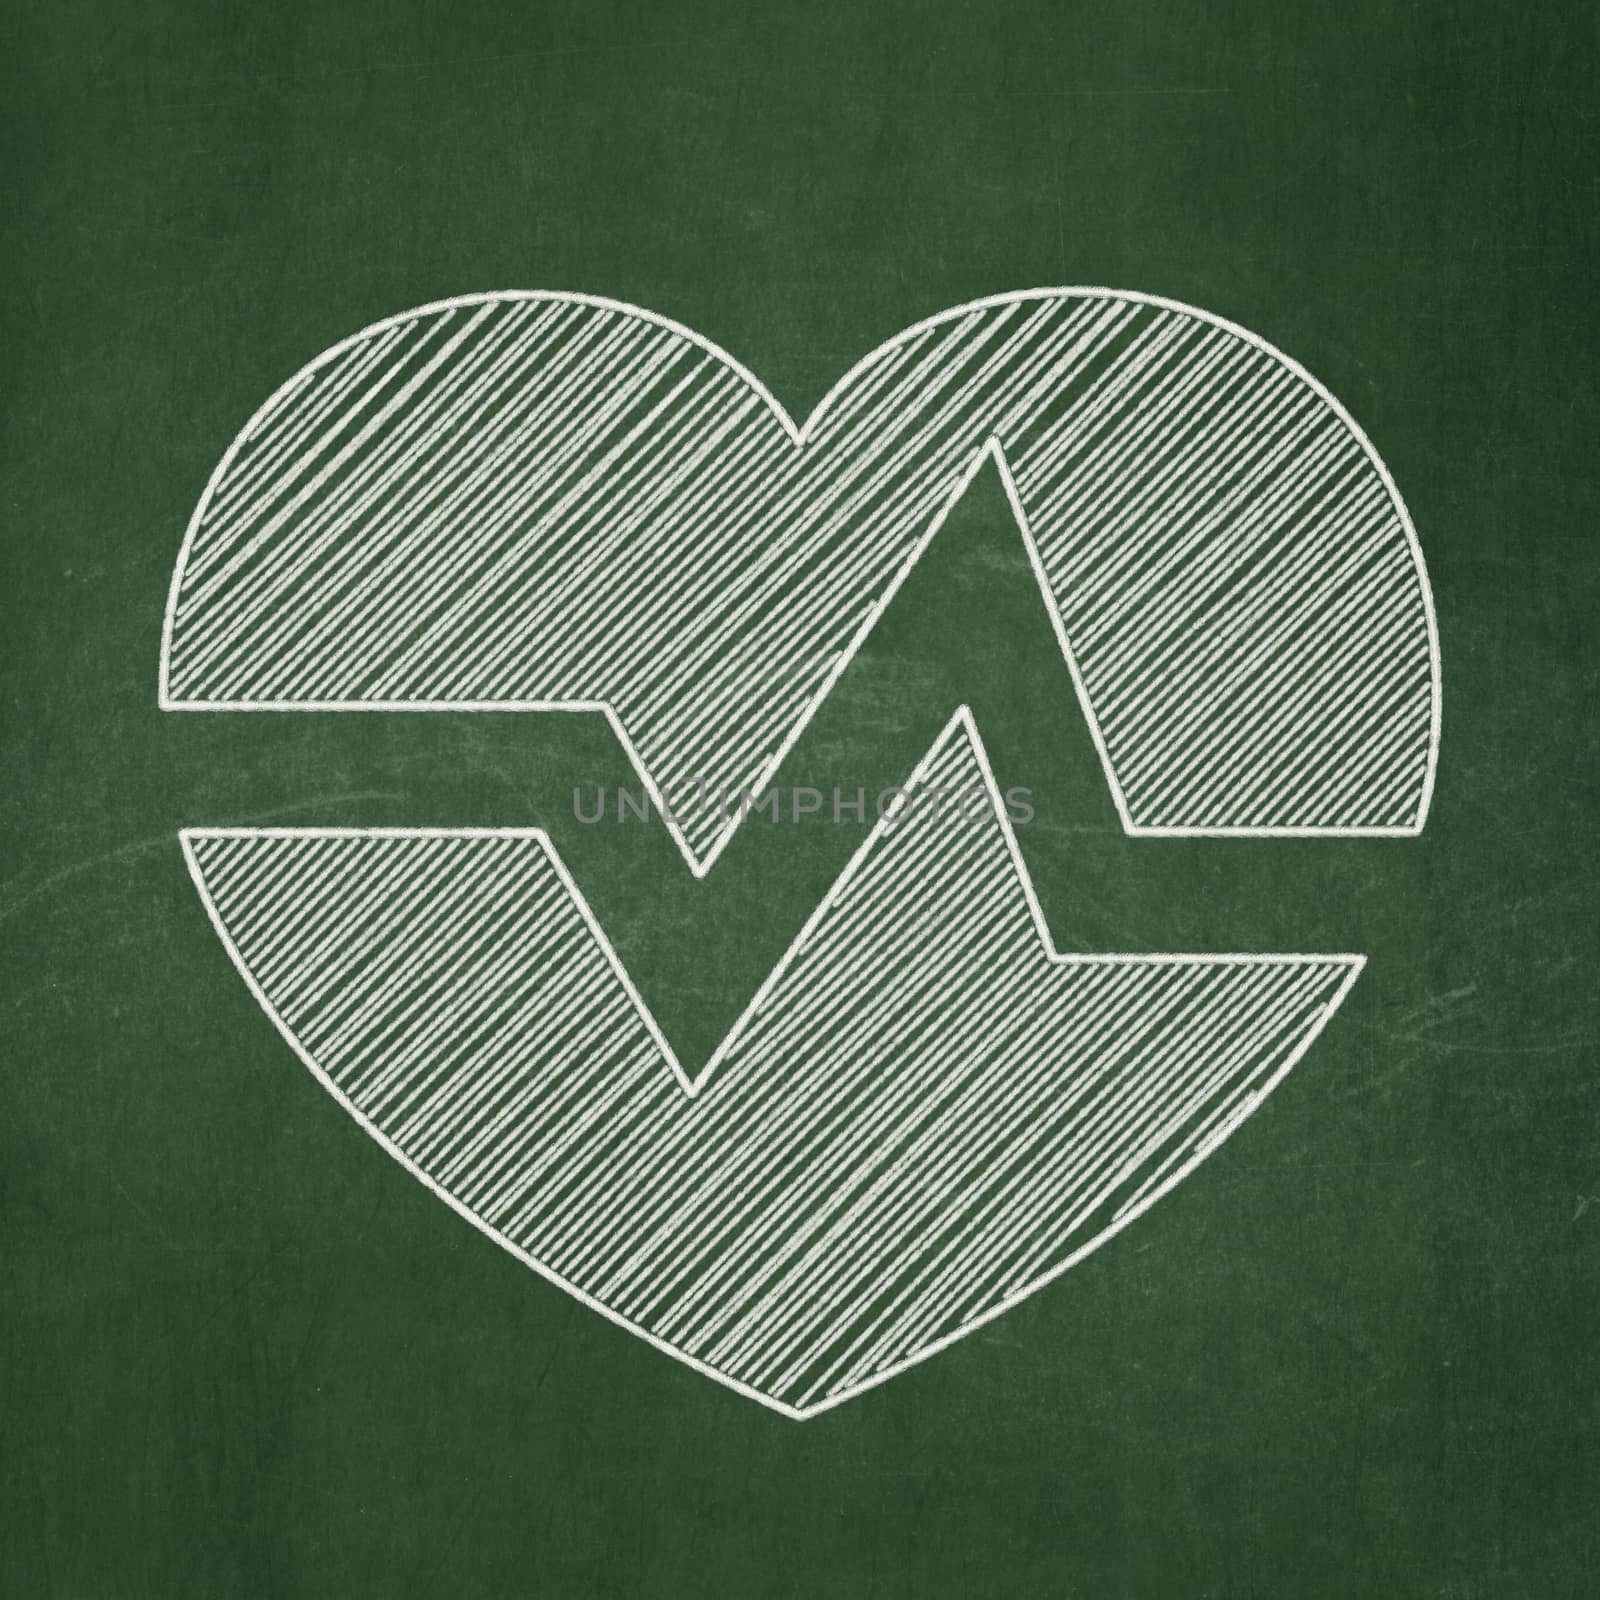 Healthcare concept: Heart on chalkboard background by maxkabakov